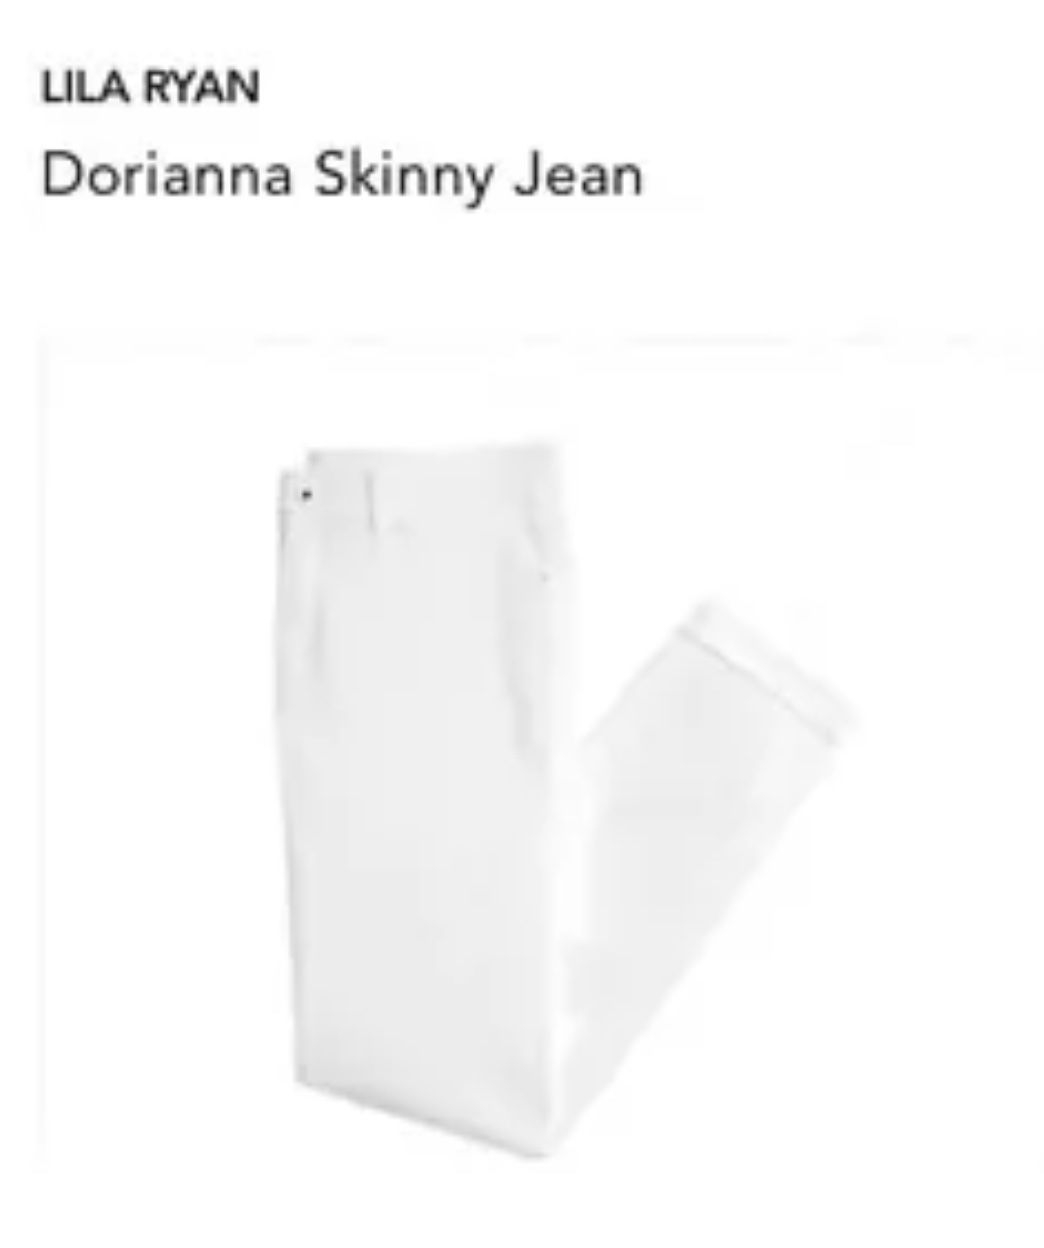 NWT Lila Ryan White Dorianna Skinny Jean Size 26 US